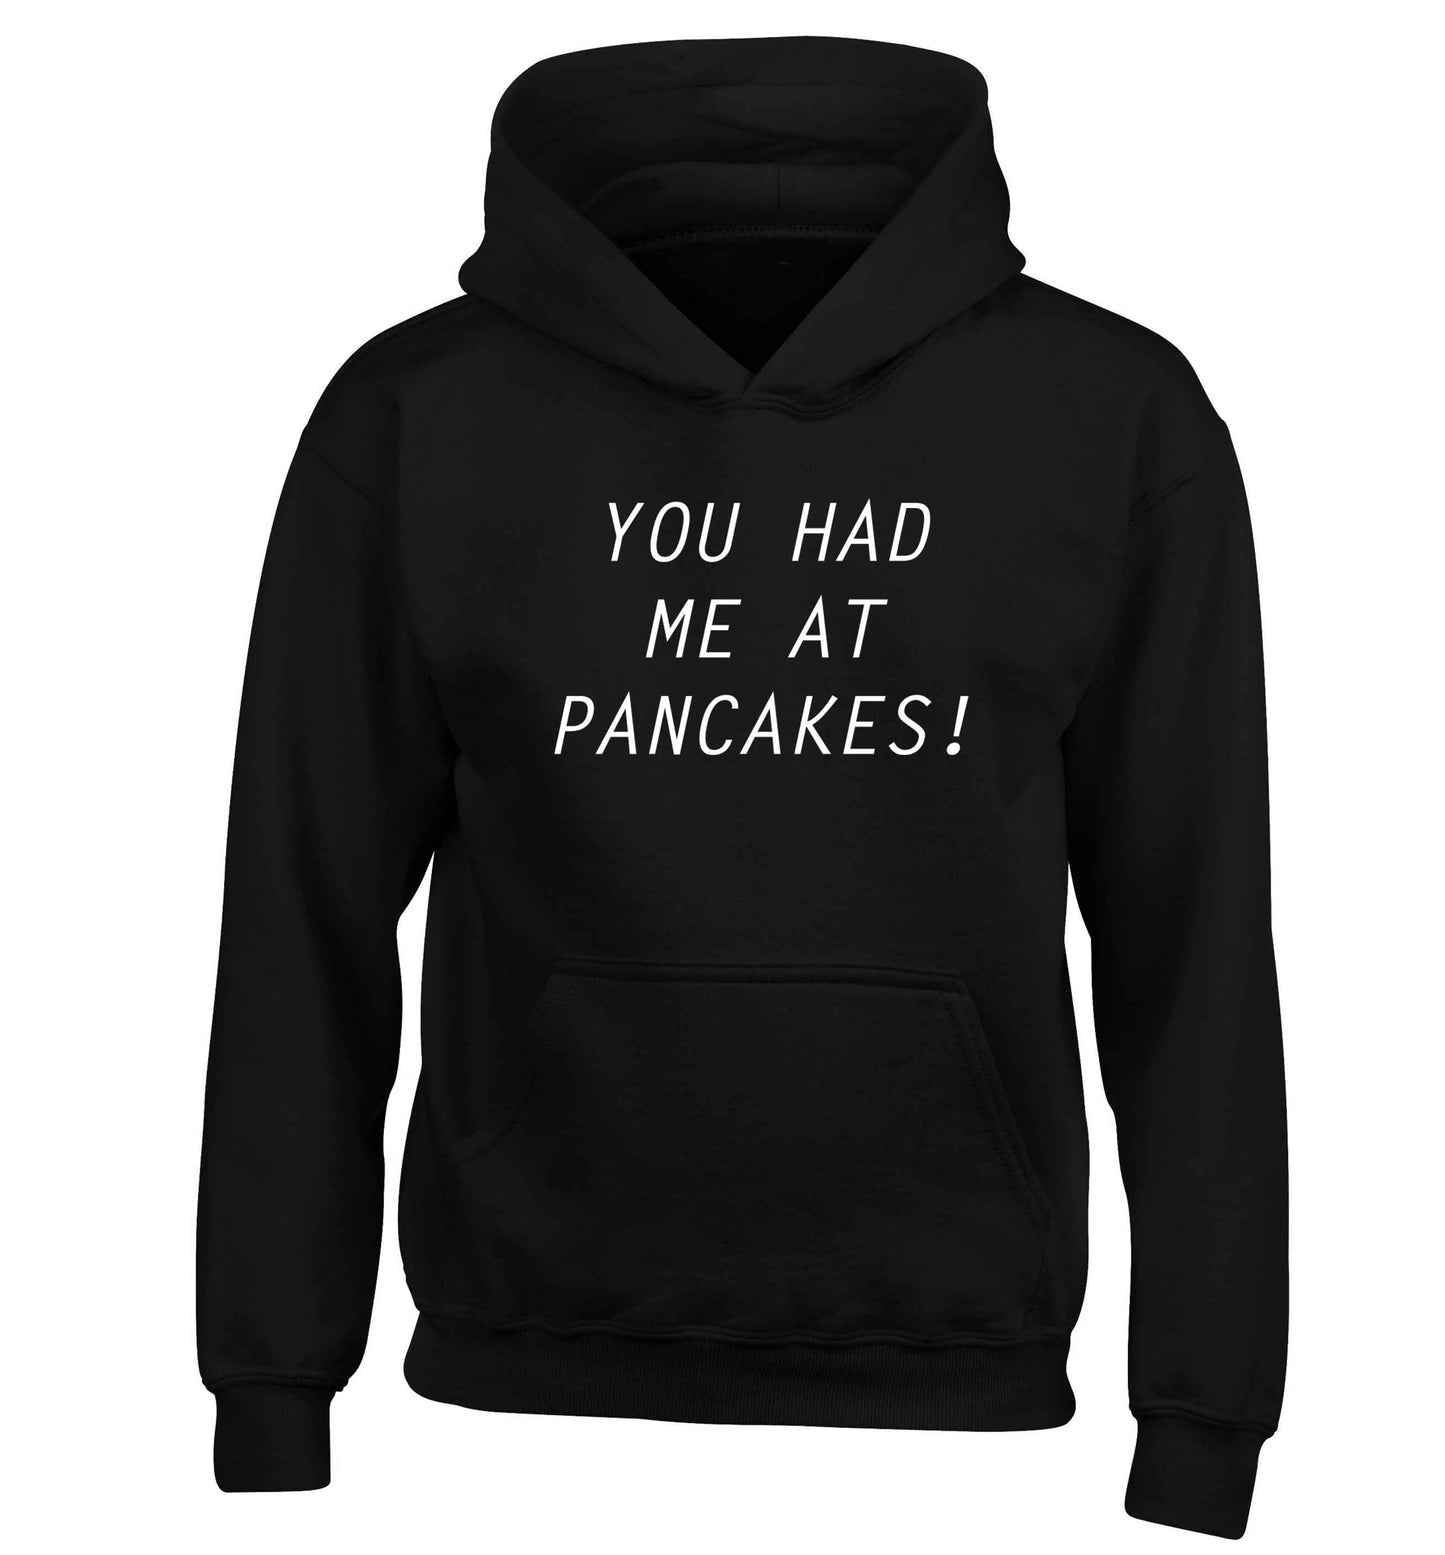 You had me at pancakes children's black hoodie 12-13 Years